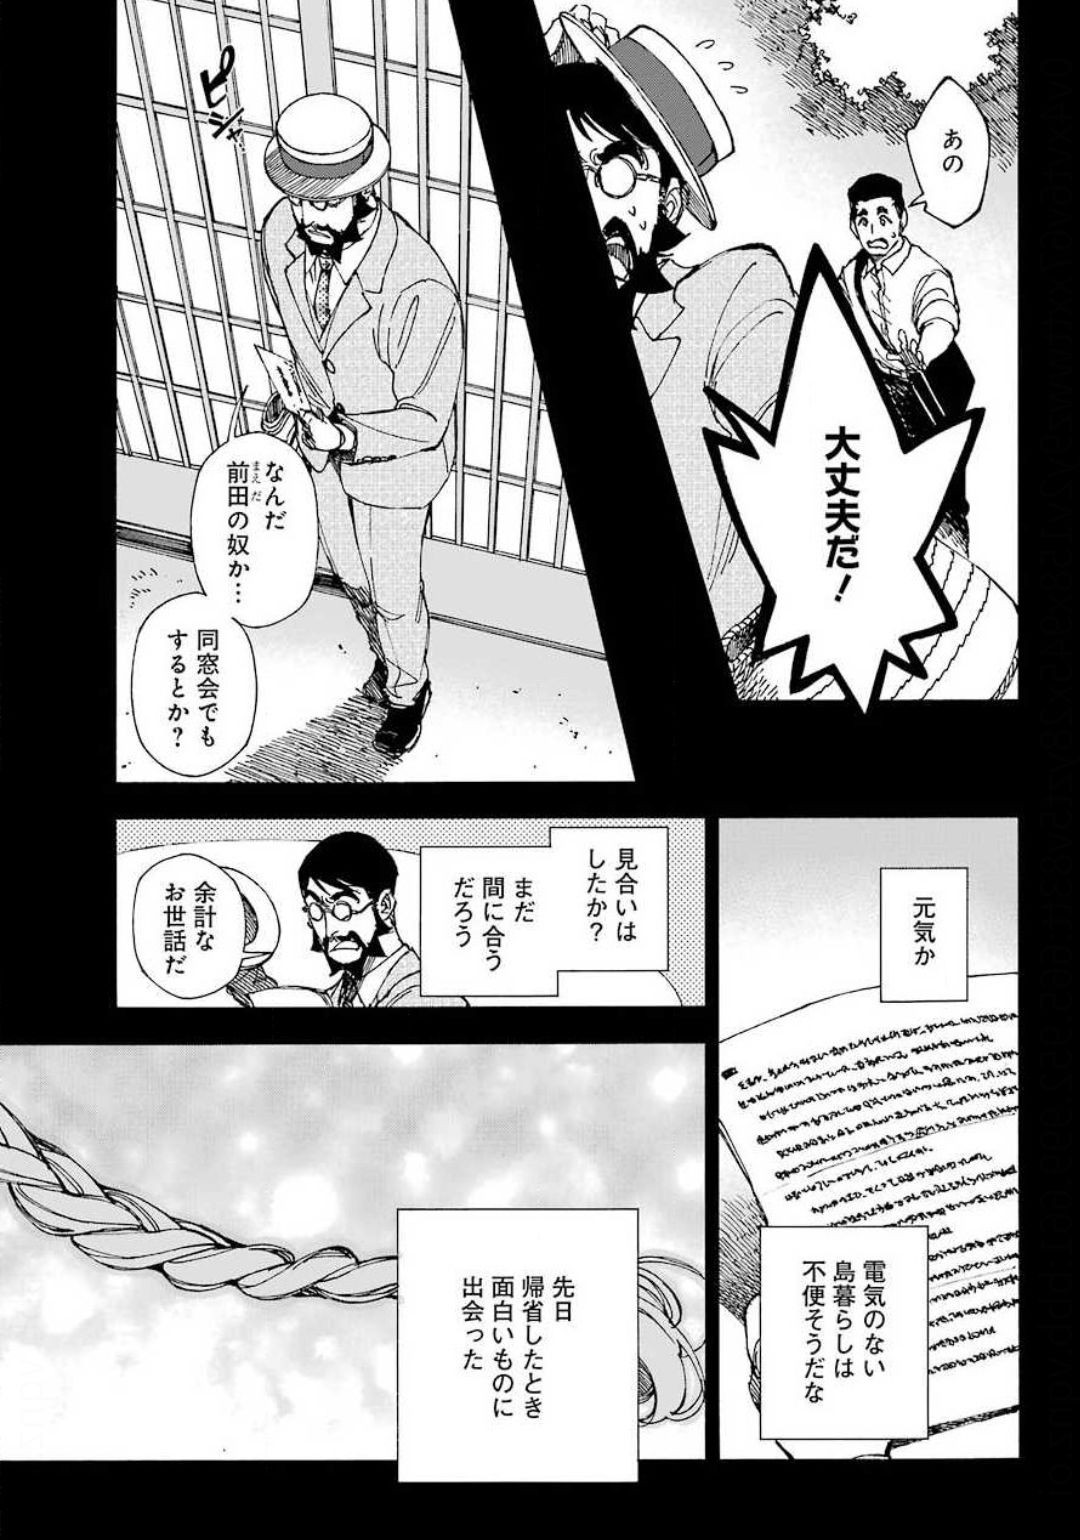 Hotomeku-kakashi - Chapter 07-1 - Page 5